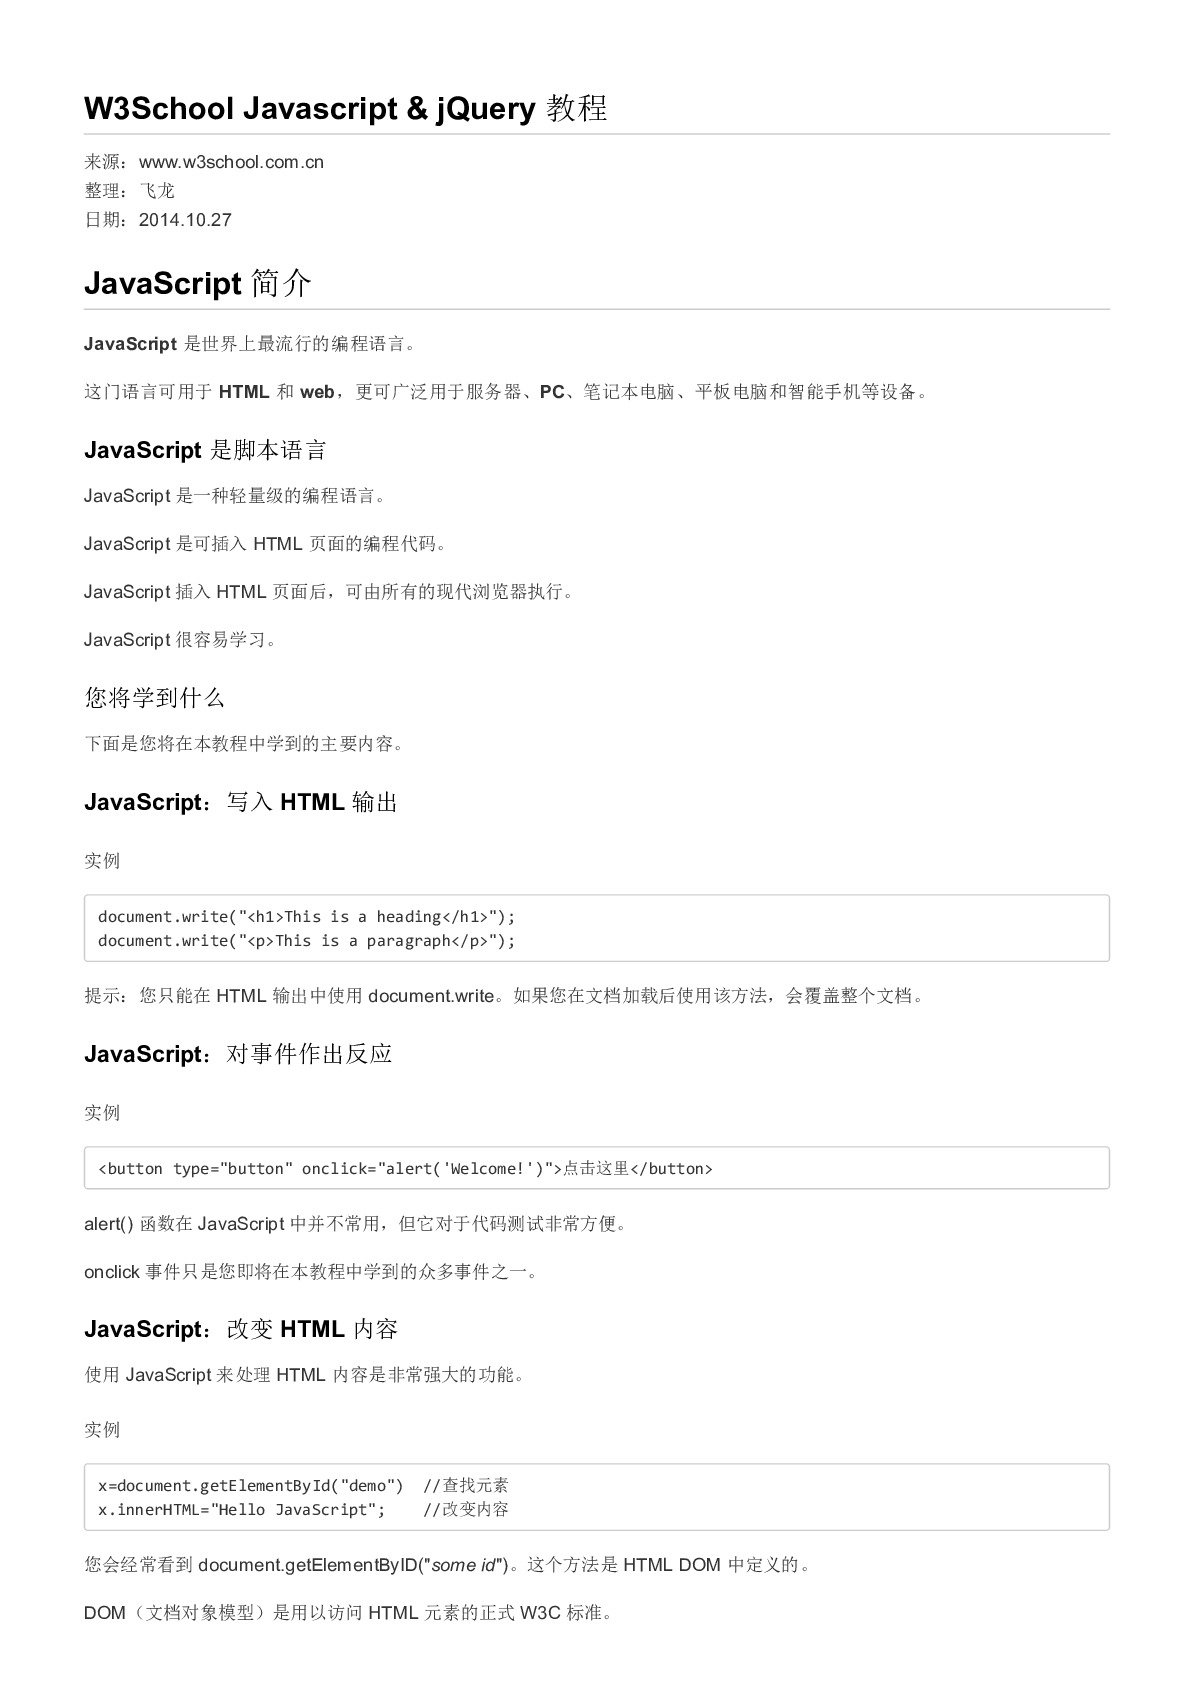 Javascript&jQuery教程_20141027